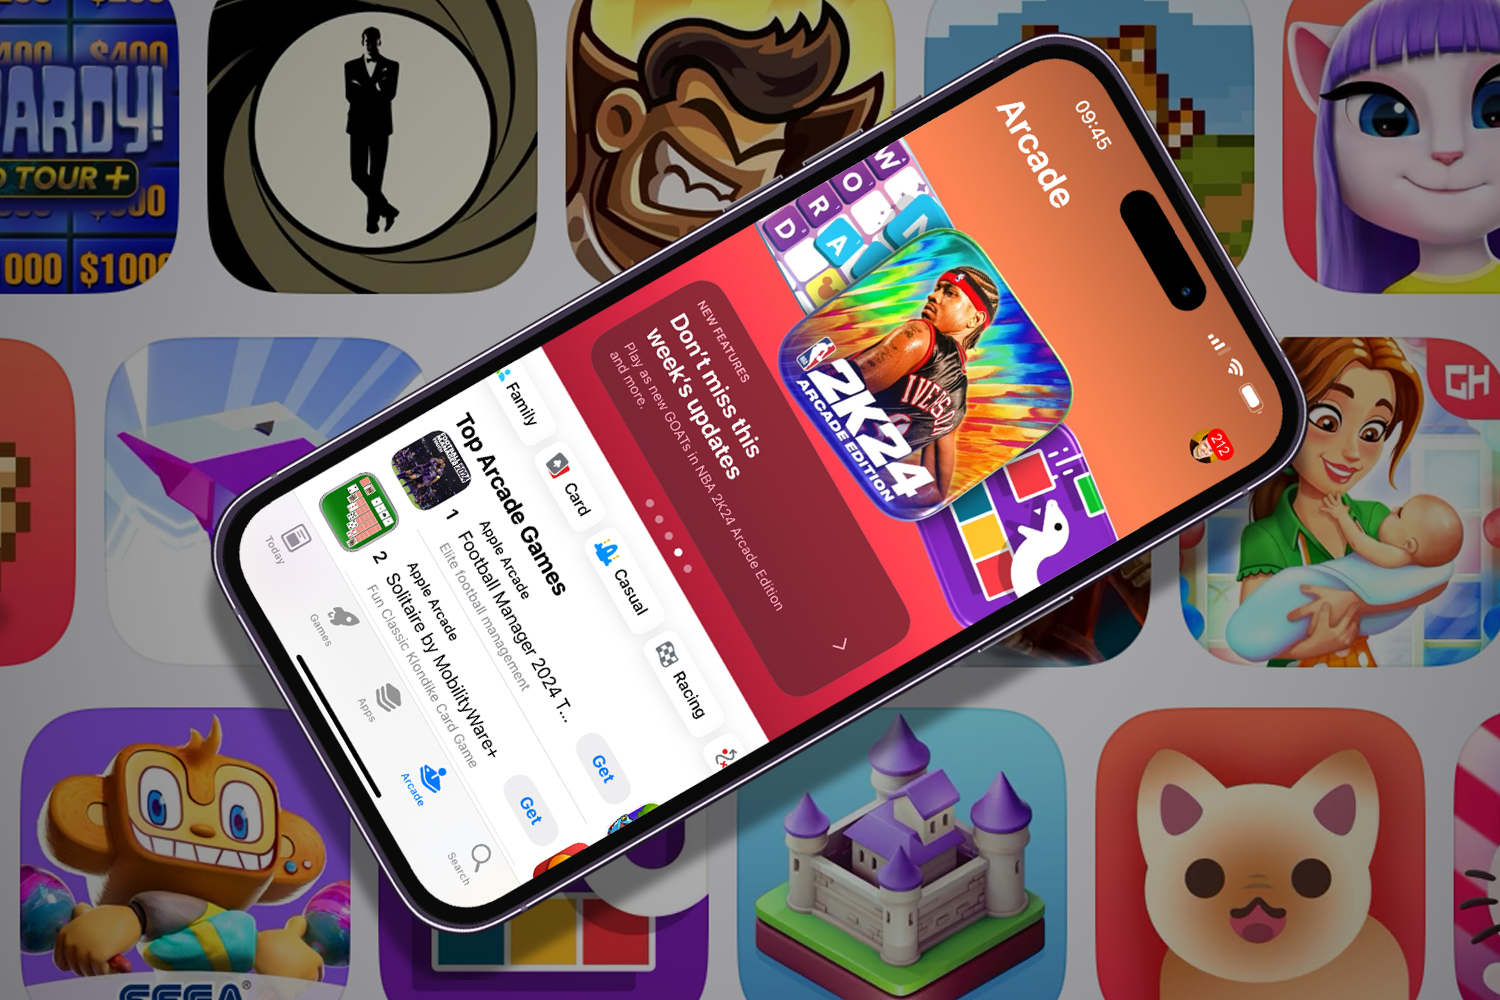 iOS] [Just a Regular Arcade – A Sweet Suite of Regular Show Games